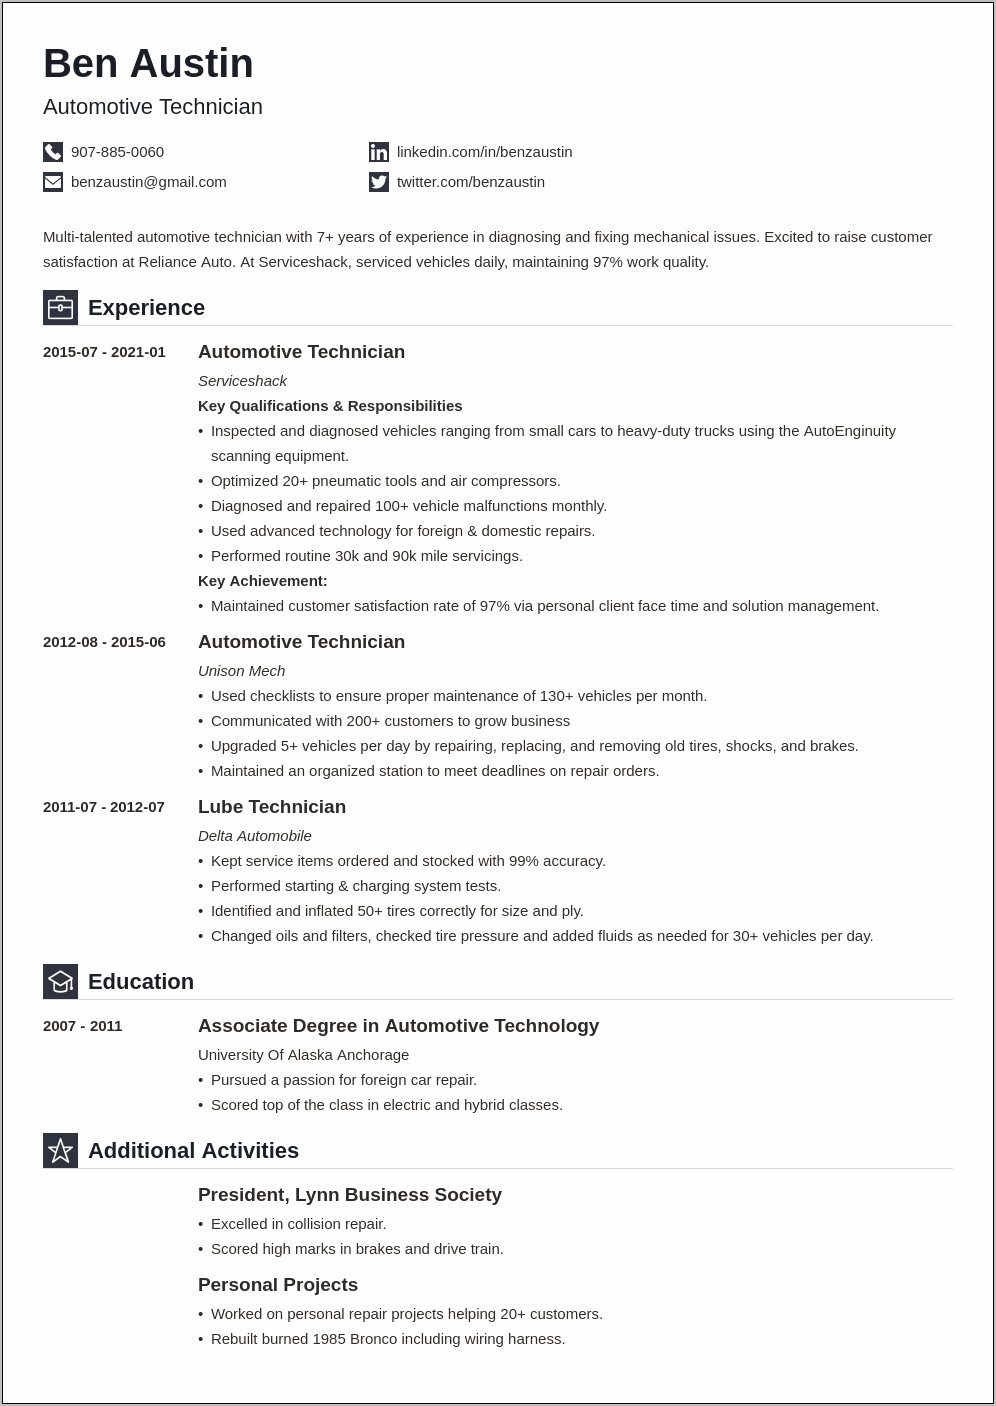 Fleet Manager Job Description Resume